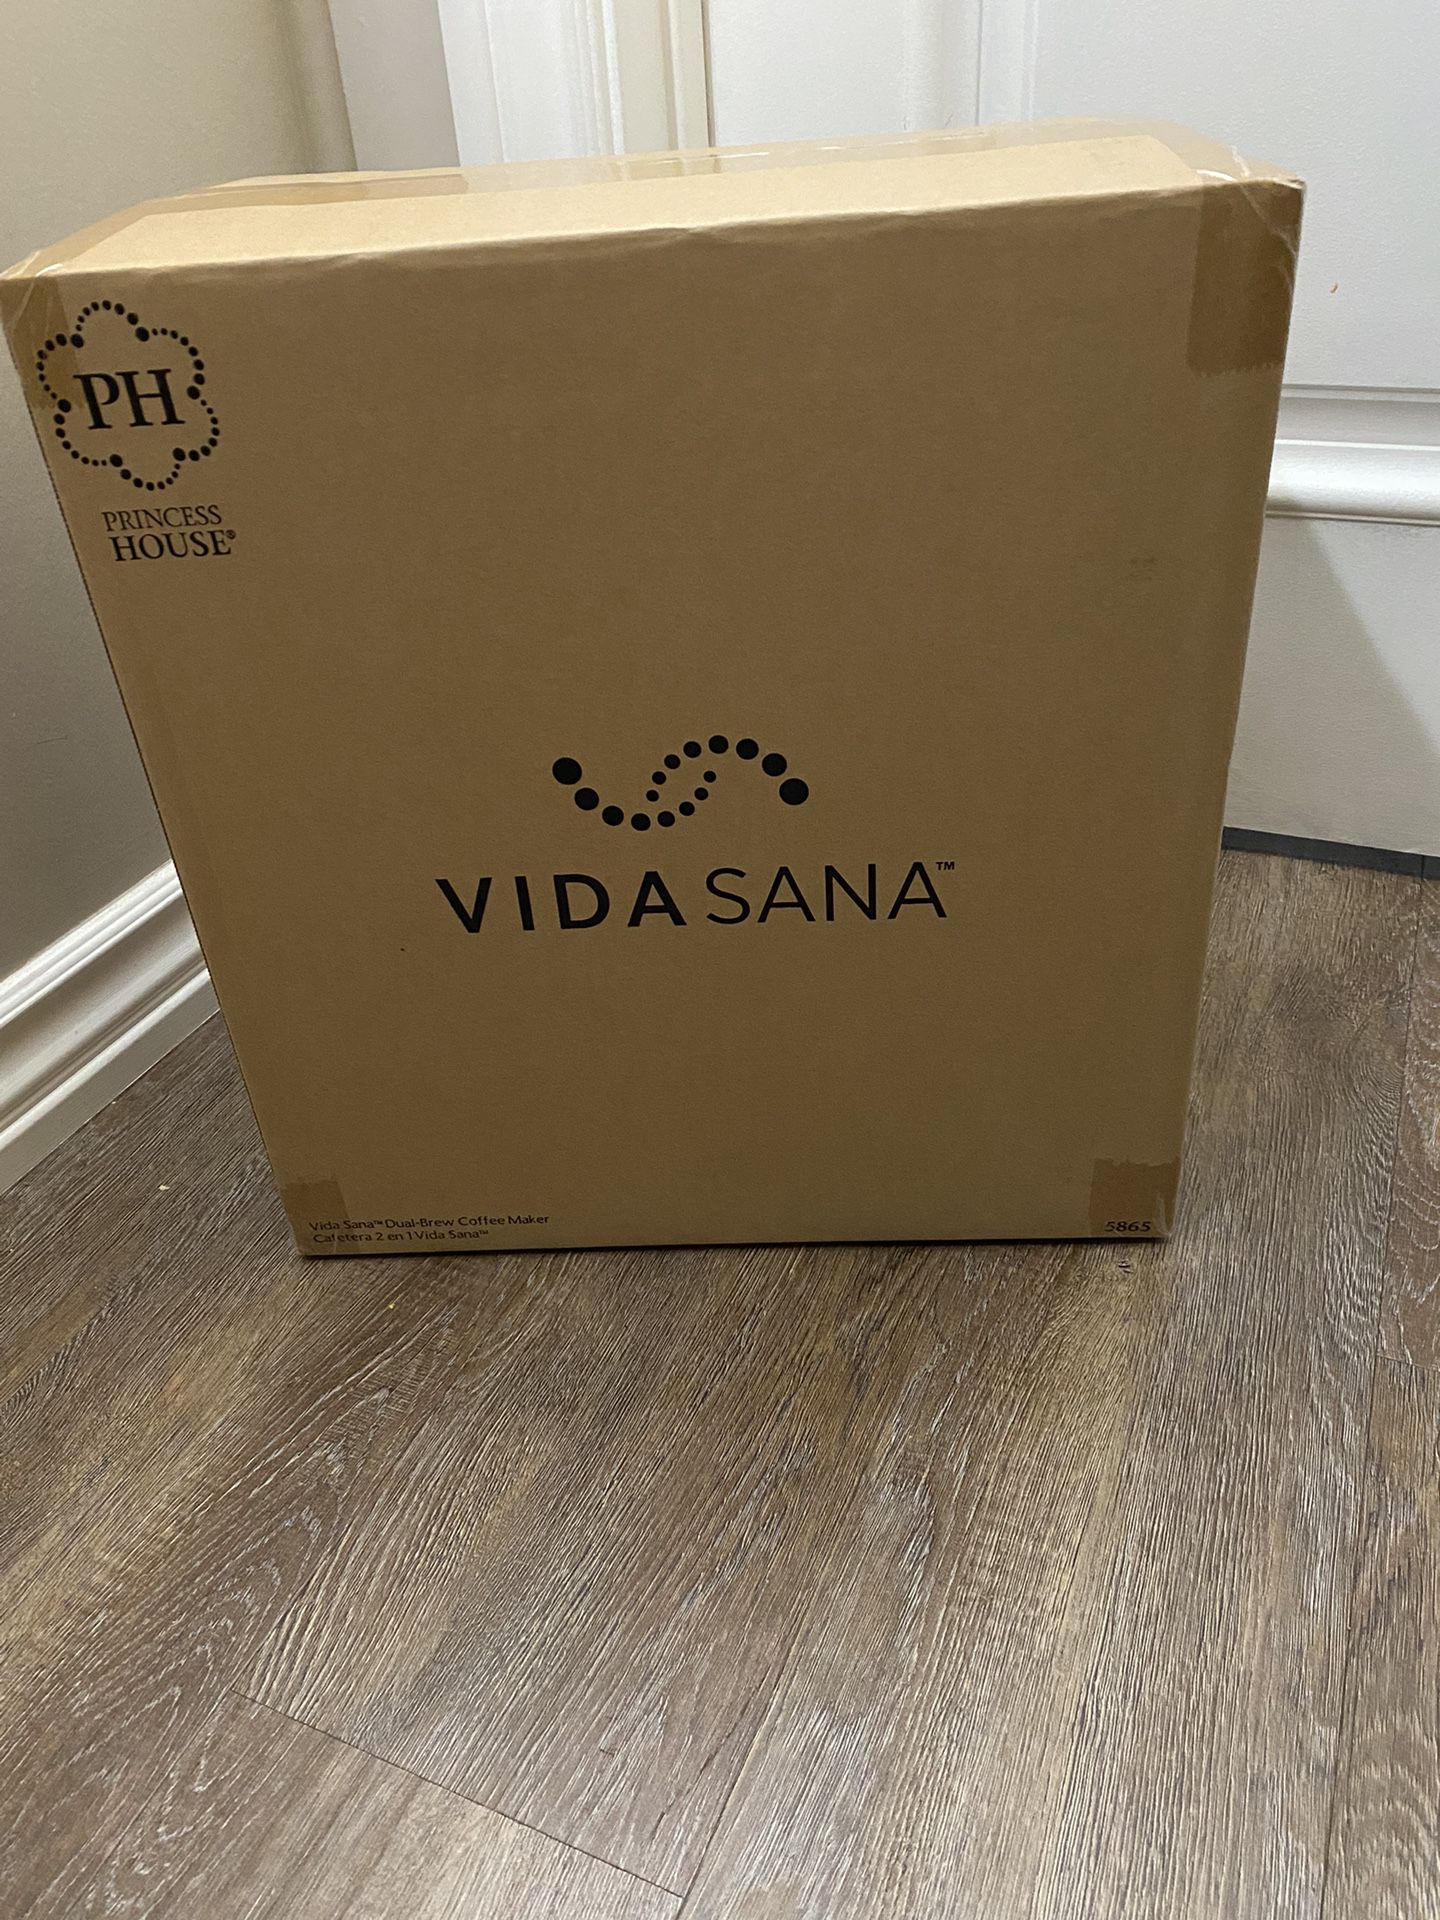 Princess House VIDA SANA ELECTRICS Dual-Brew Coffee Maker (5865) New In Box